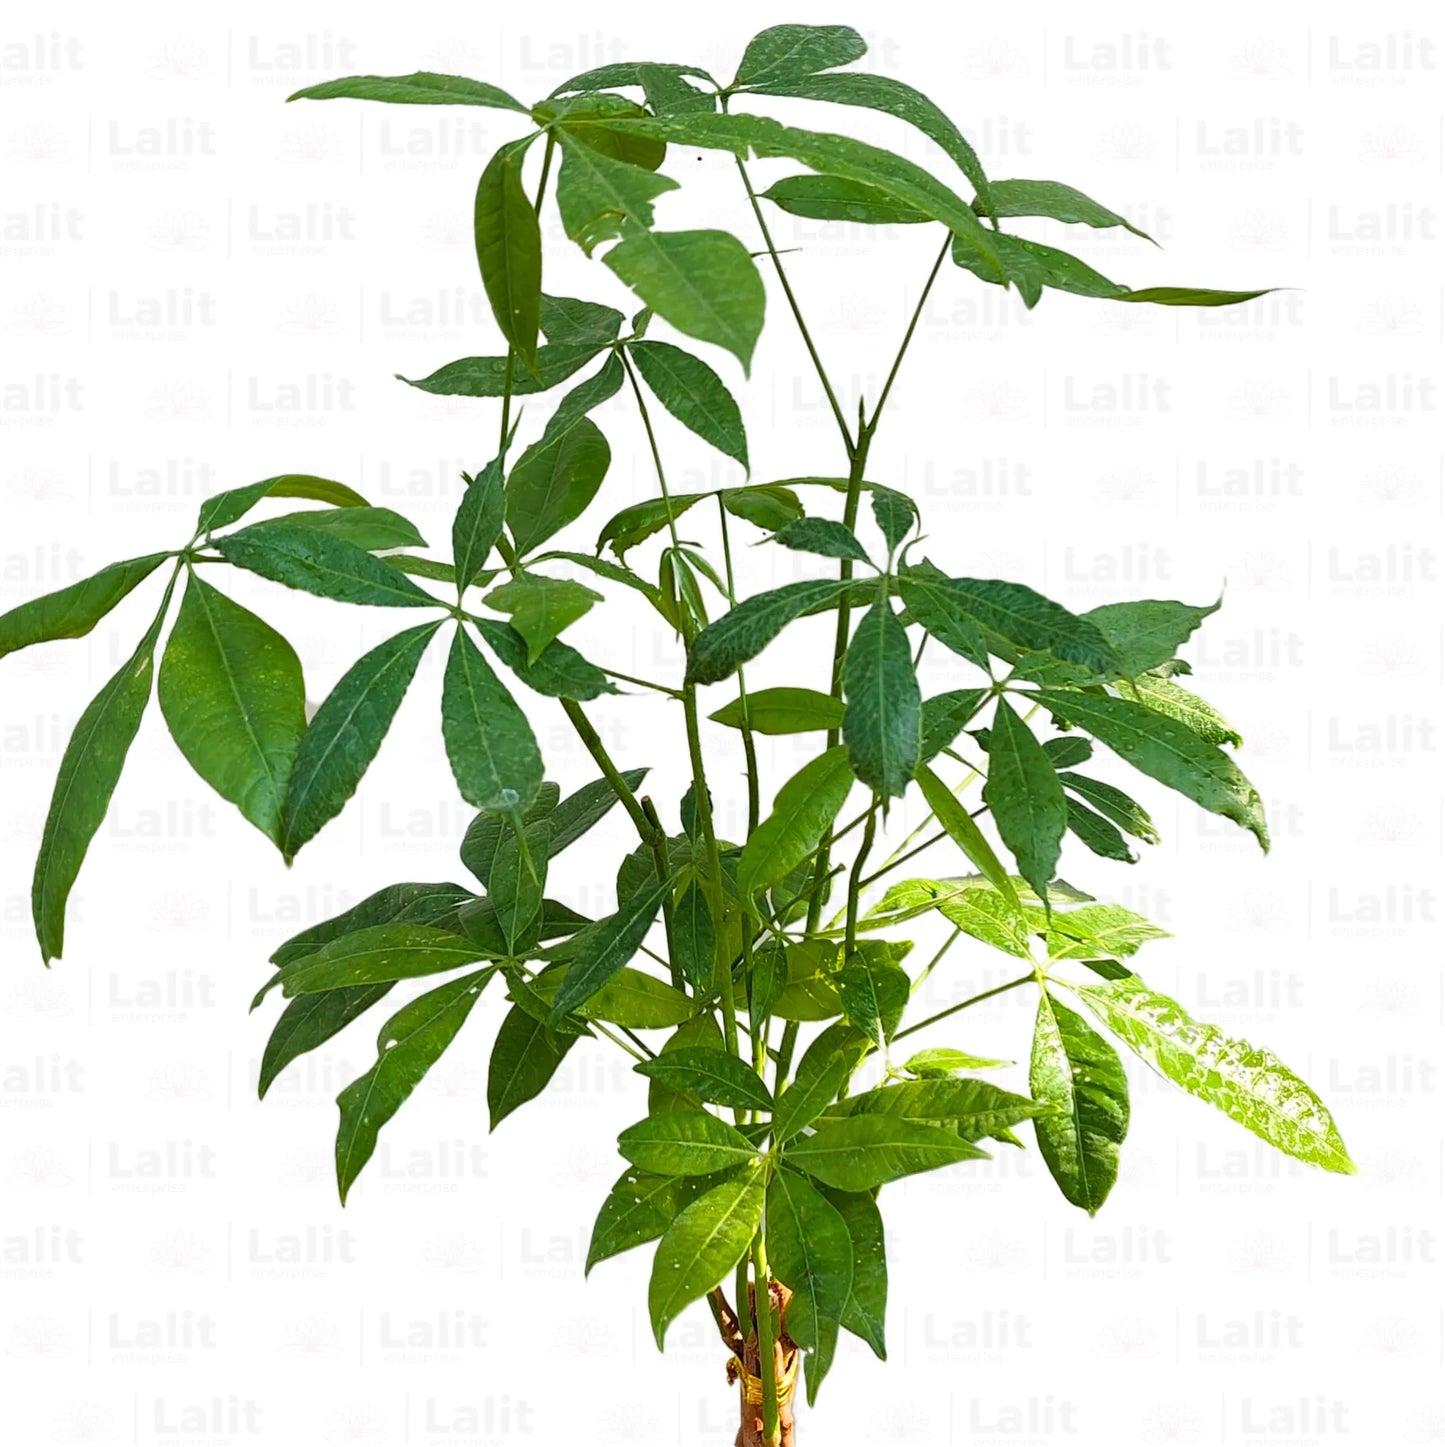 Pachira Aquatica | Money Tree Bonsai - Plant